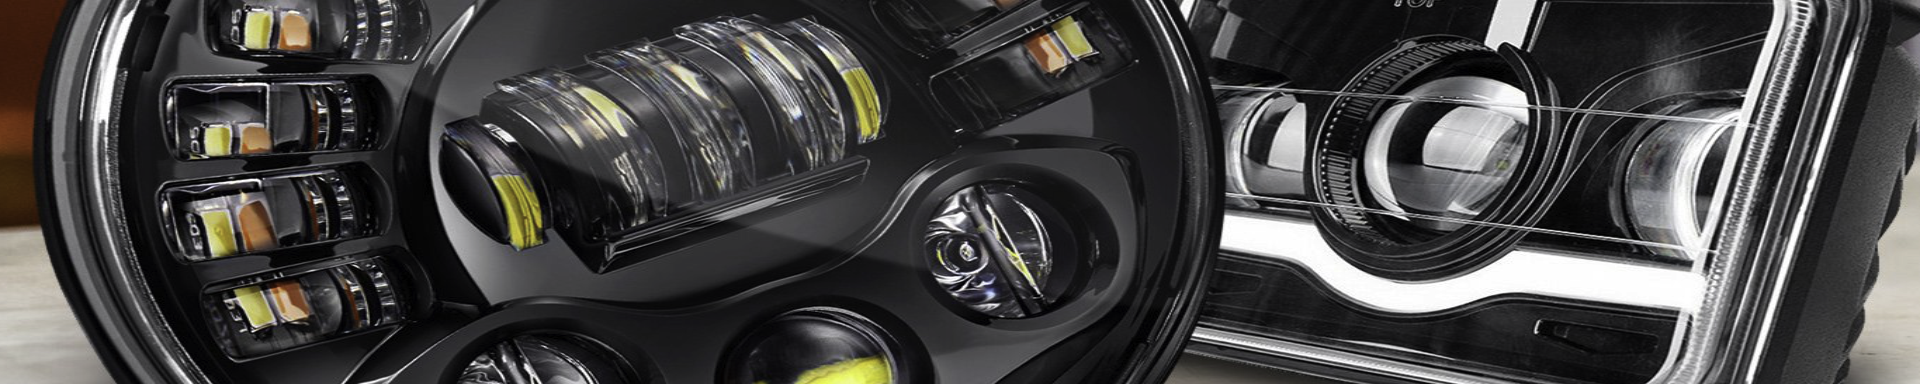 Universal Sealed Beam Headlights | GarageAndFab.com | Munro Industries gf-100103060508